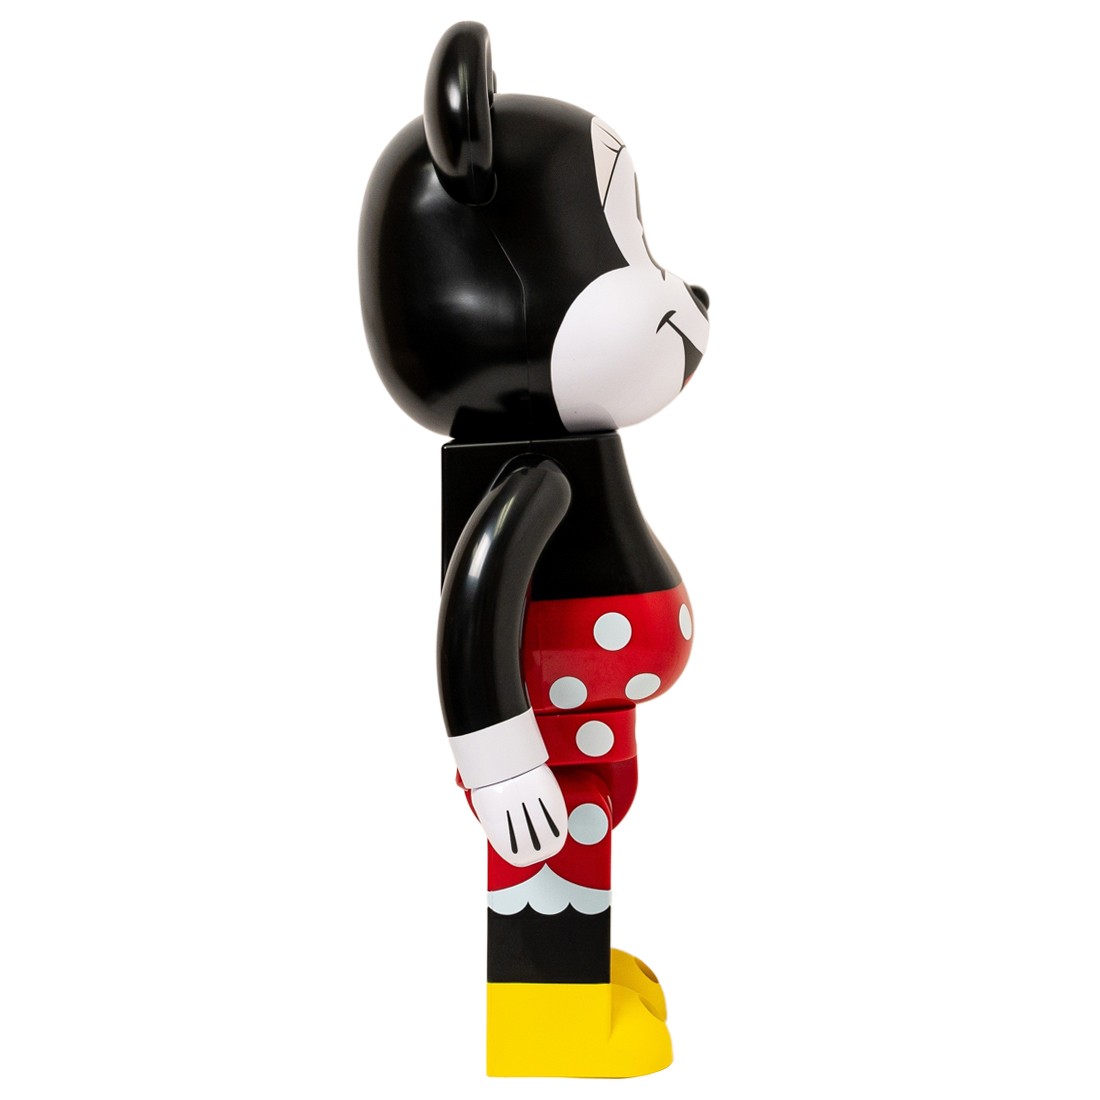 Medicom Disney Minnie Mouse 1000% Bearbrick Figure black red